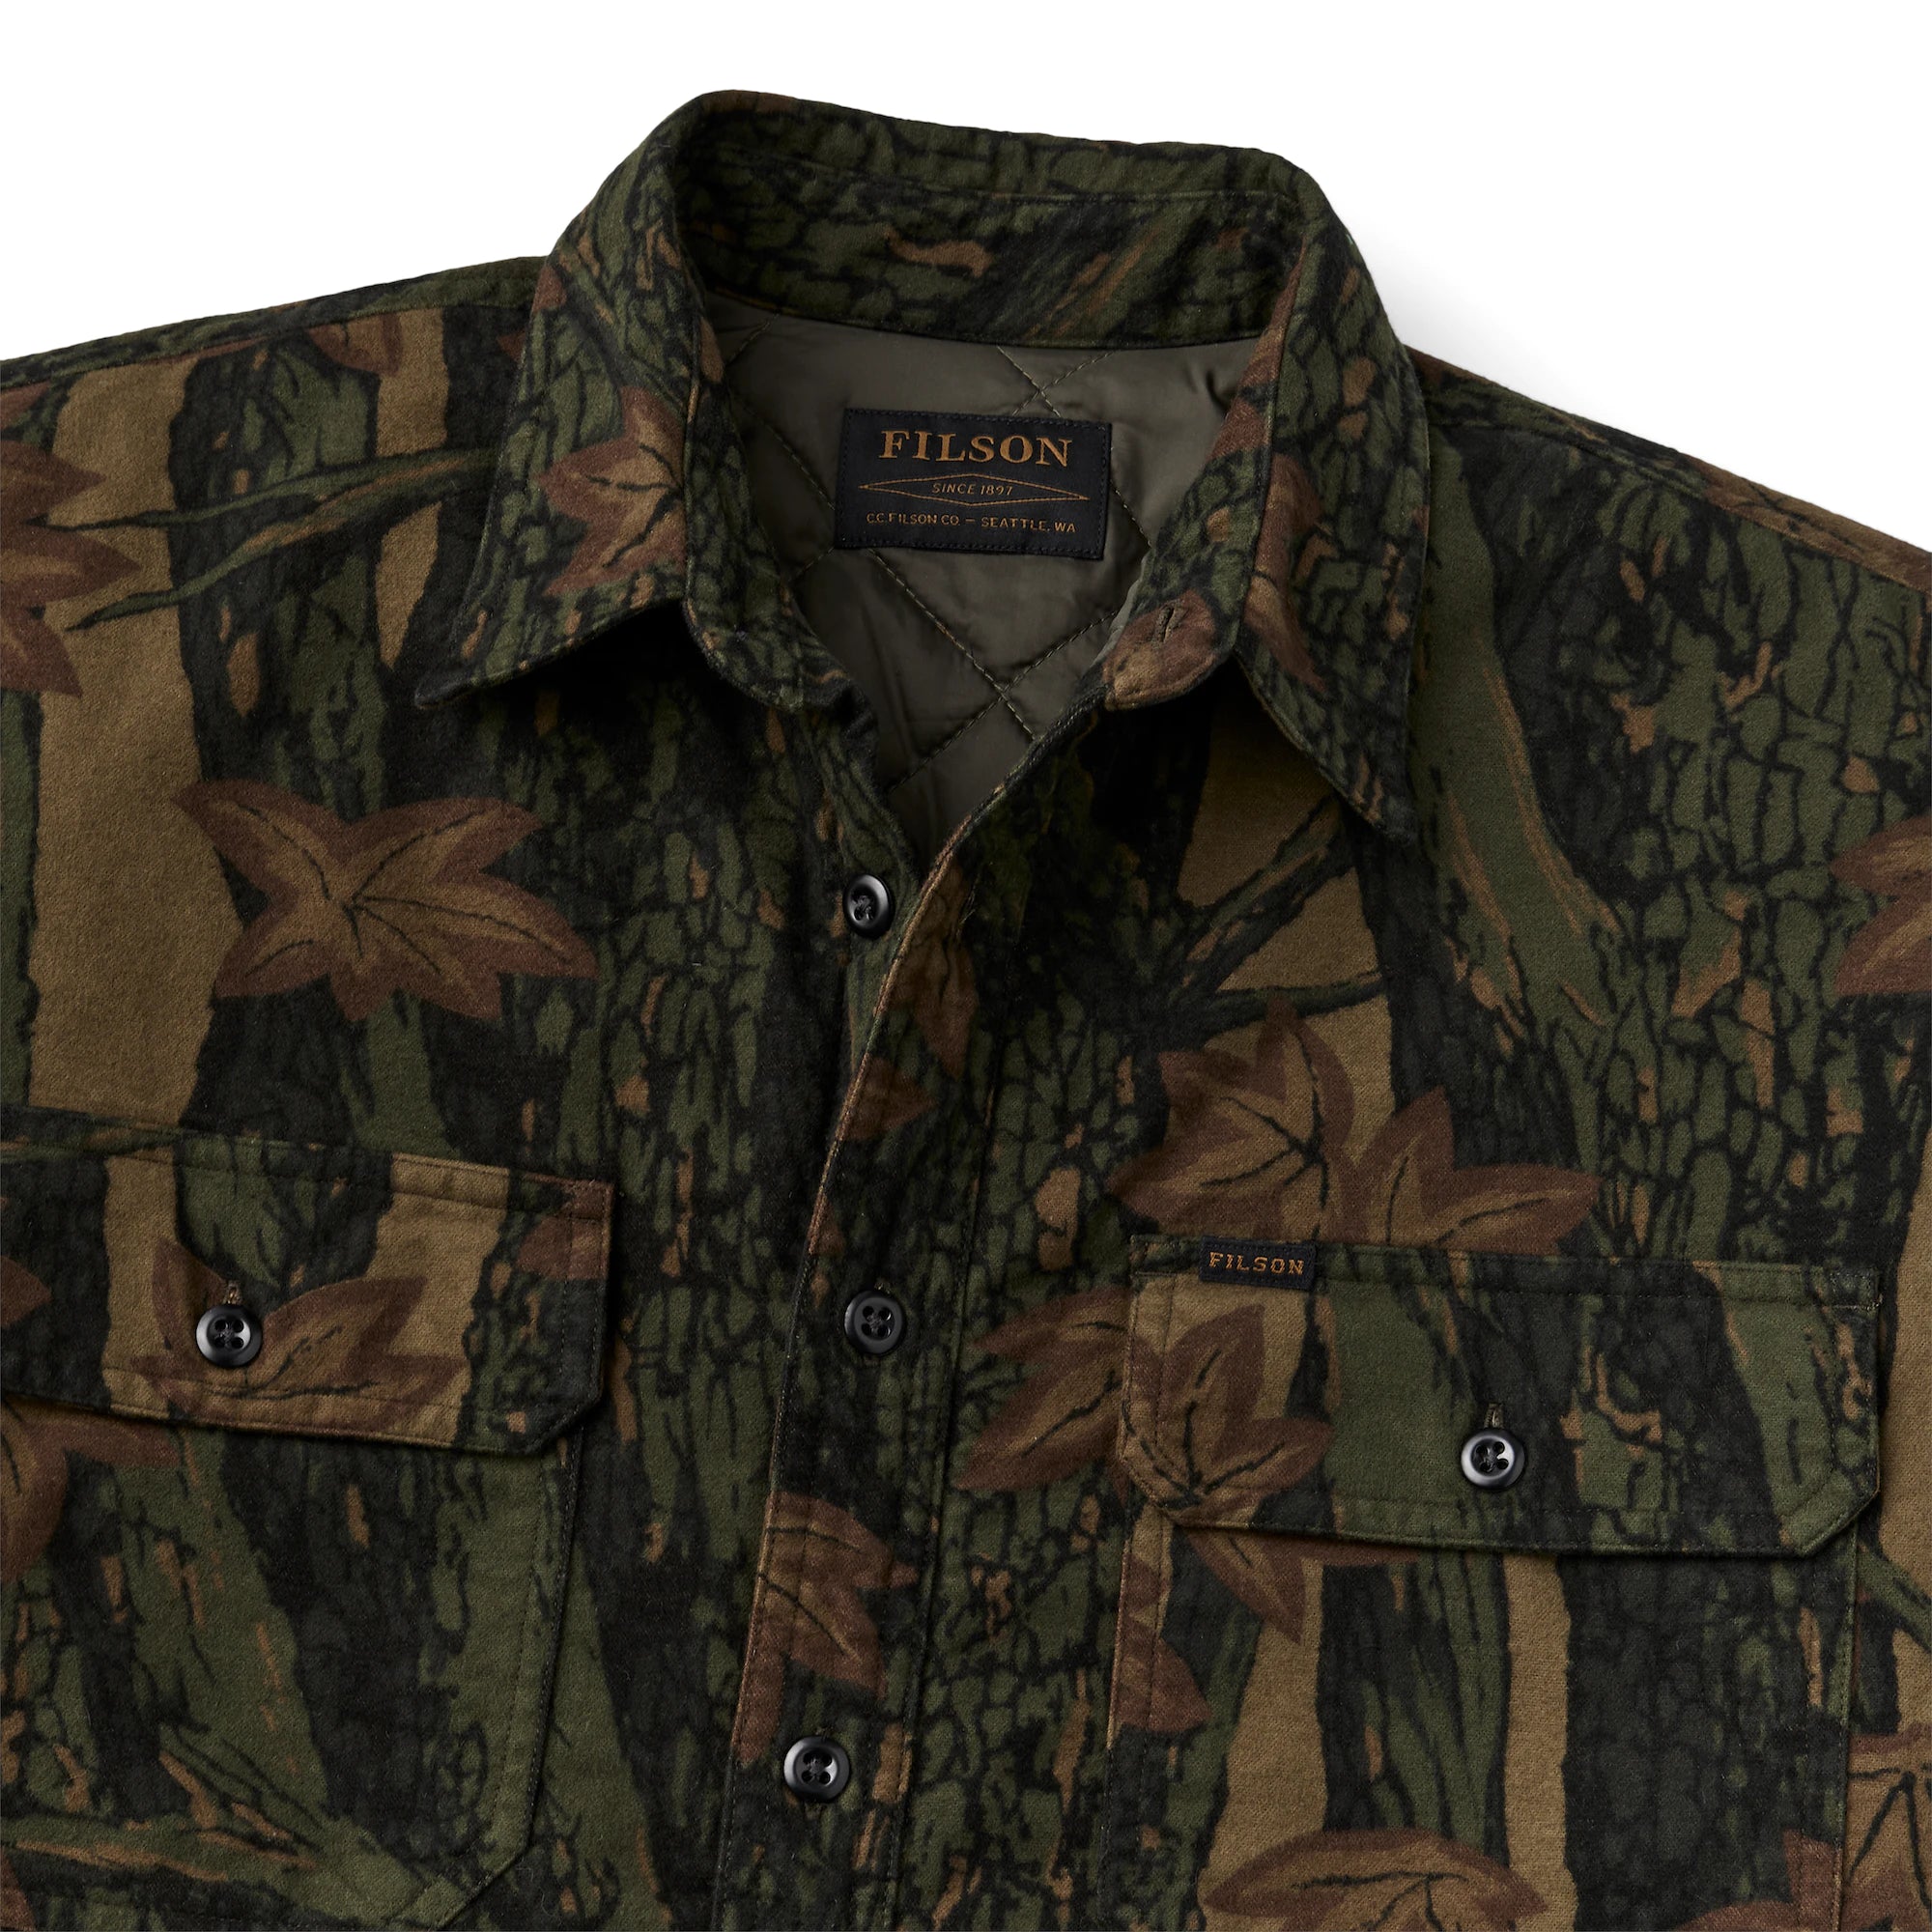 Insulated Field Flannel Shirt "Maple Bark"